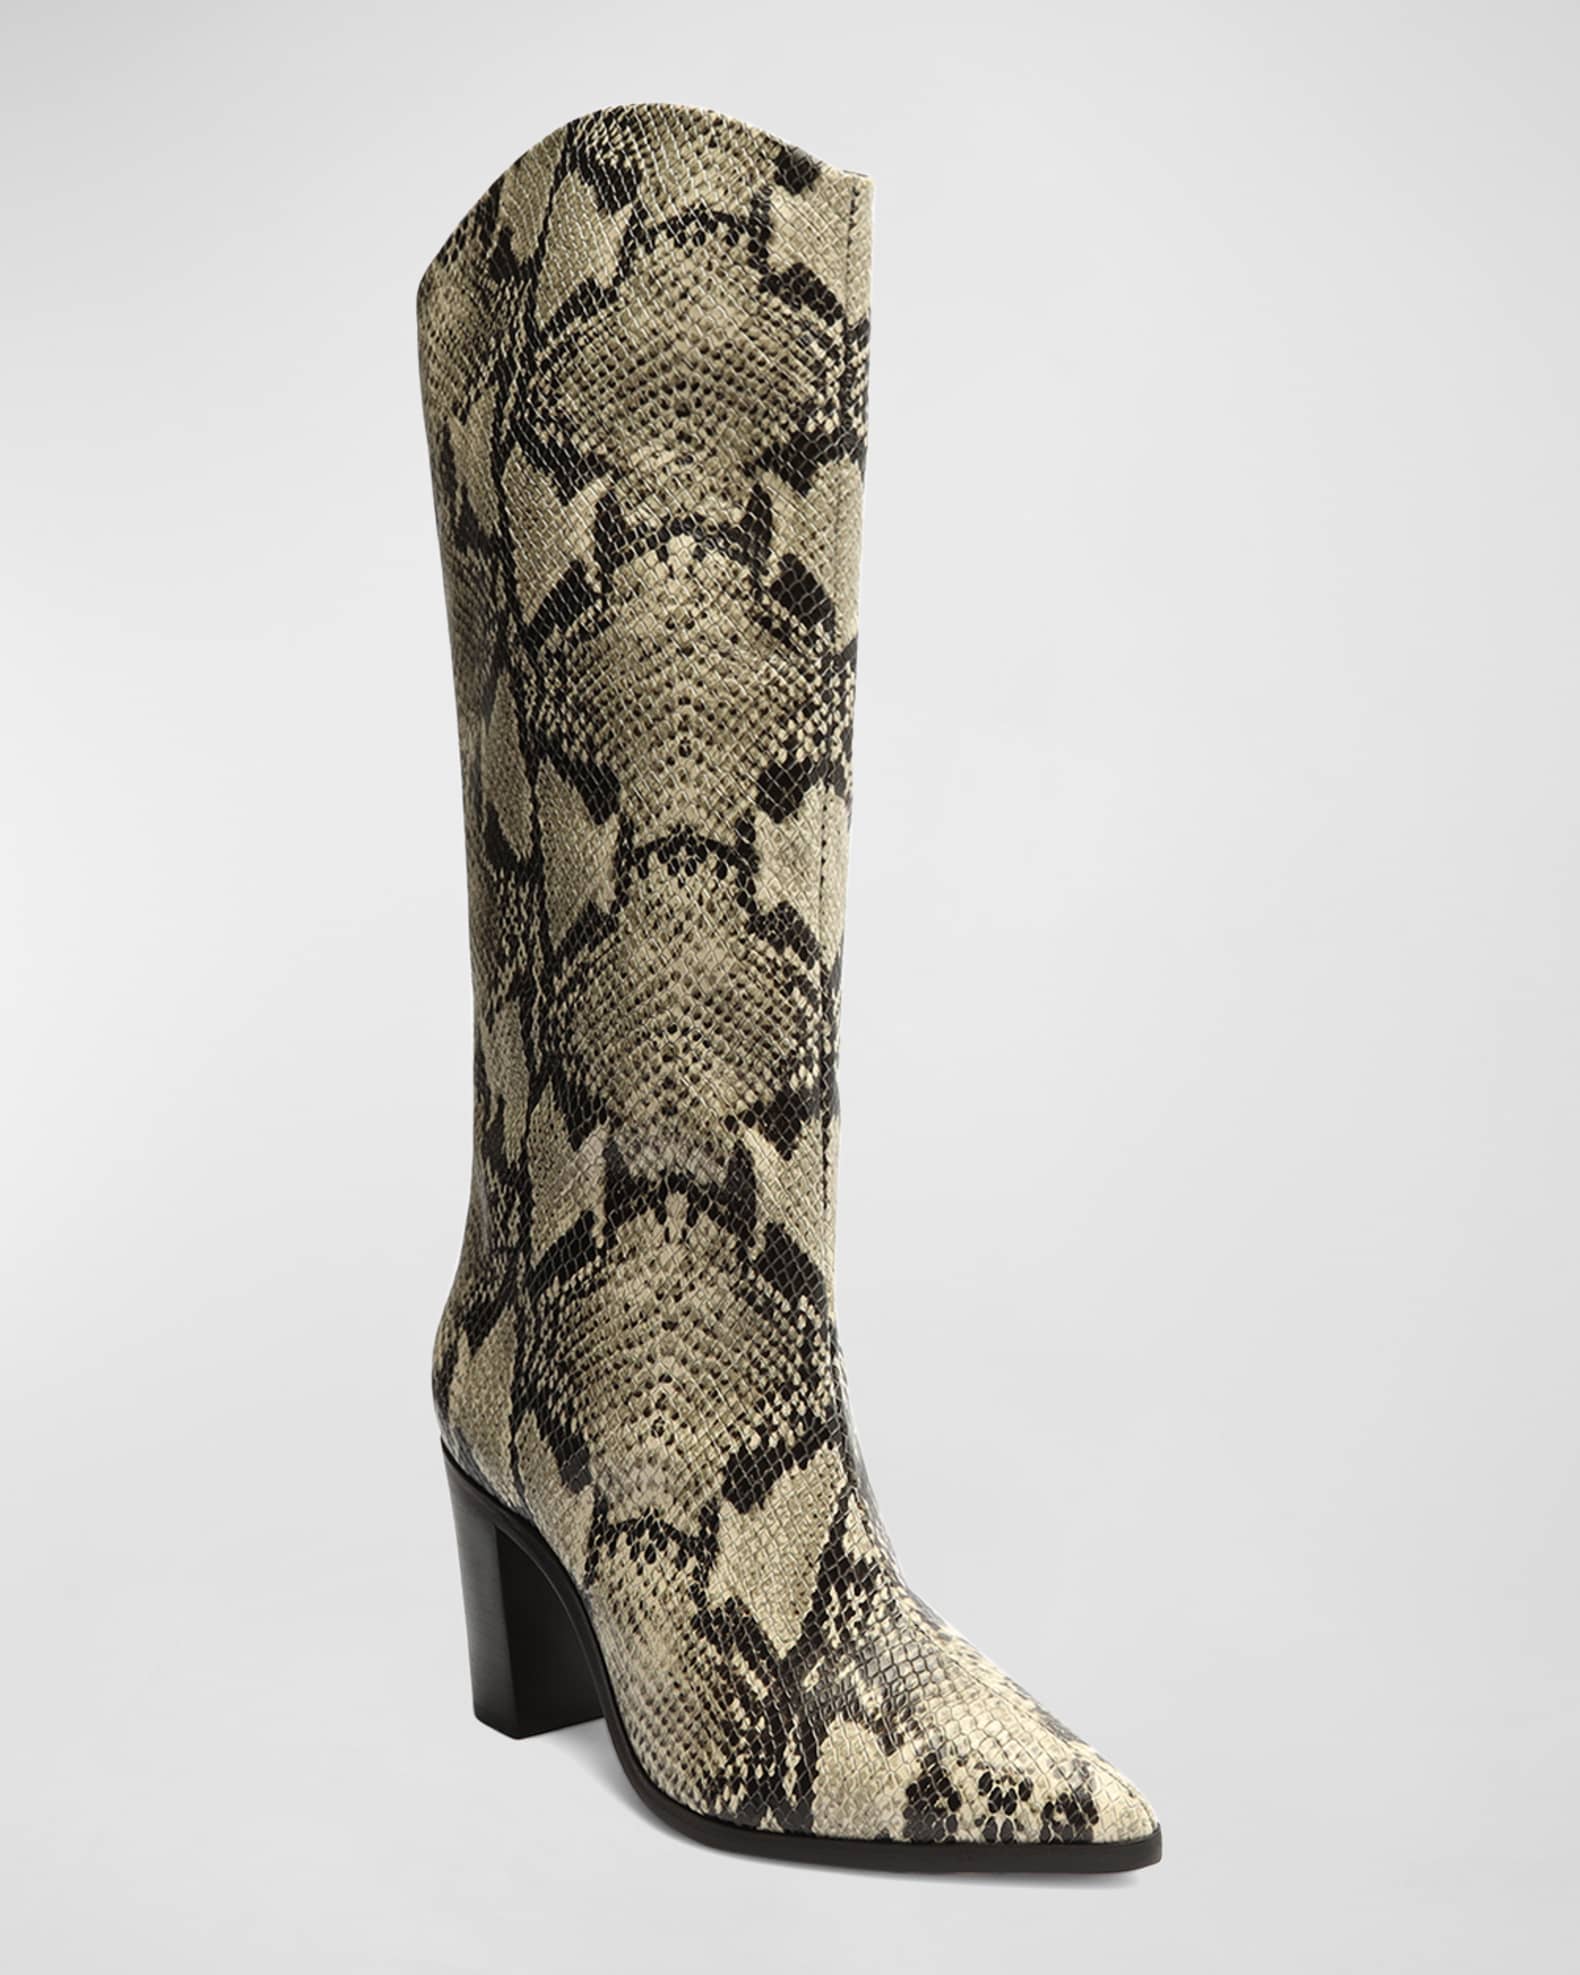 Schutz Analeah Snake-Print Leather Tall Boots | Neiman Marcus